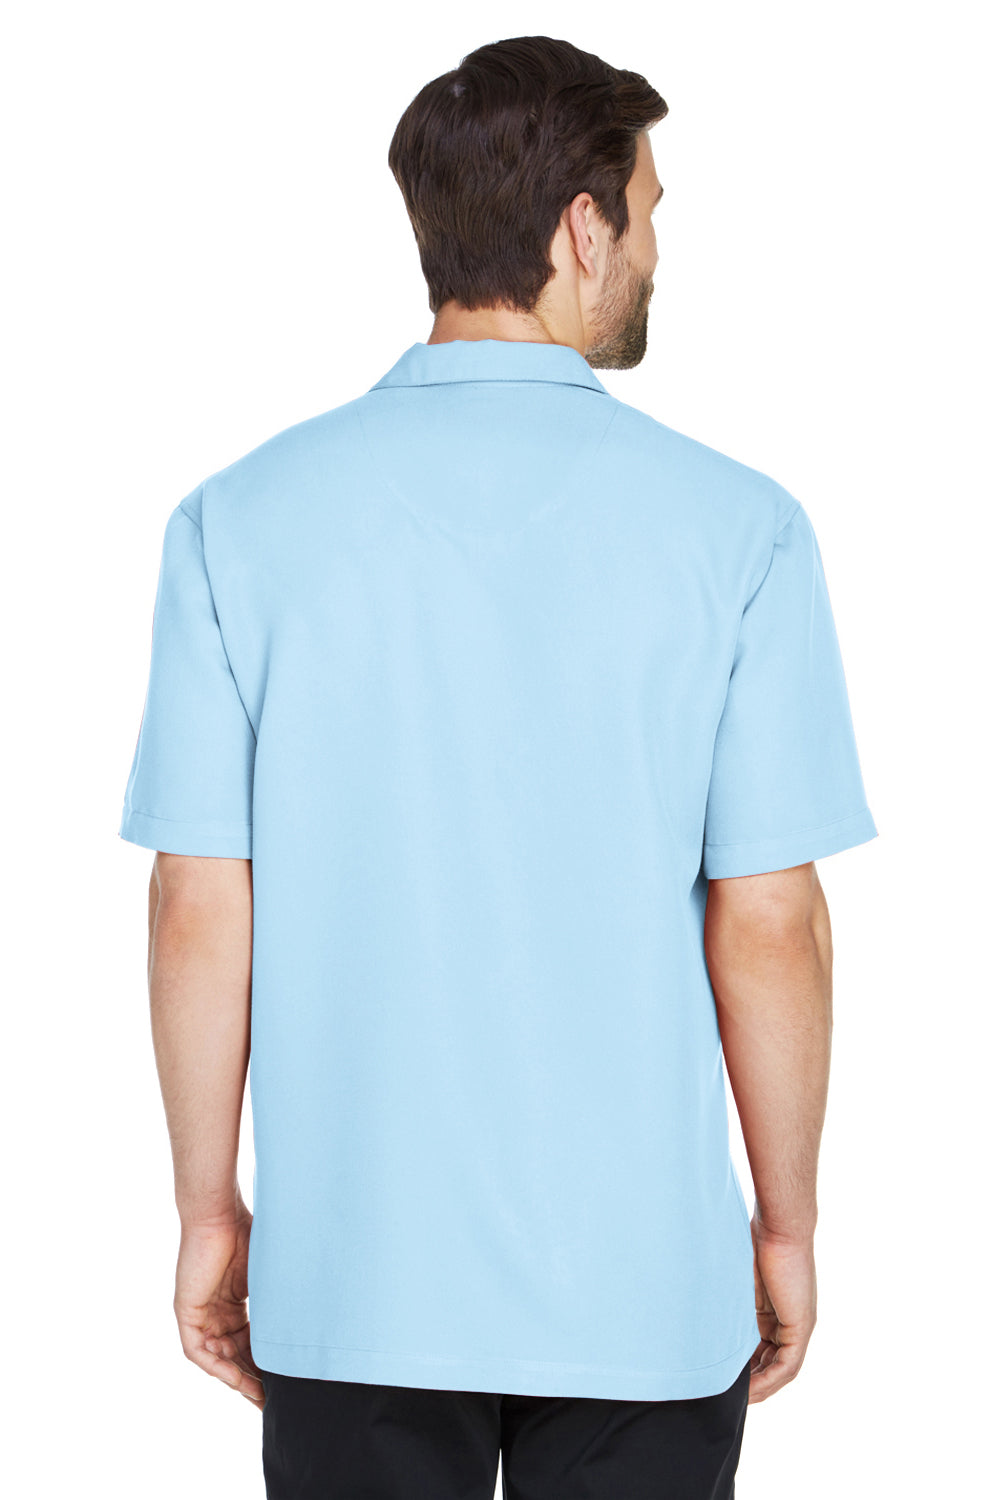 UltraClub 8980 Mens Cabana Breeze Short Sleeve Button Down Camp Shirt w/ Pocket Island Blue Back